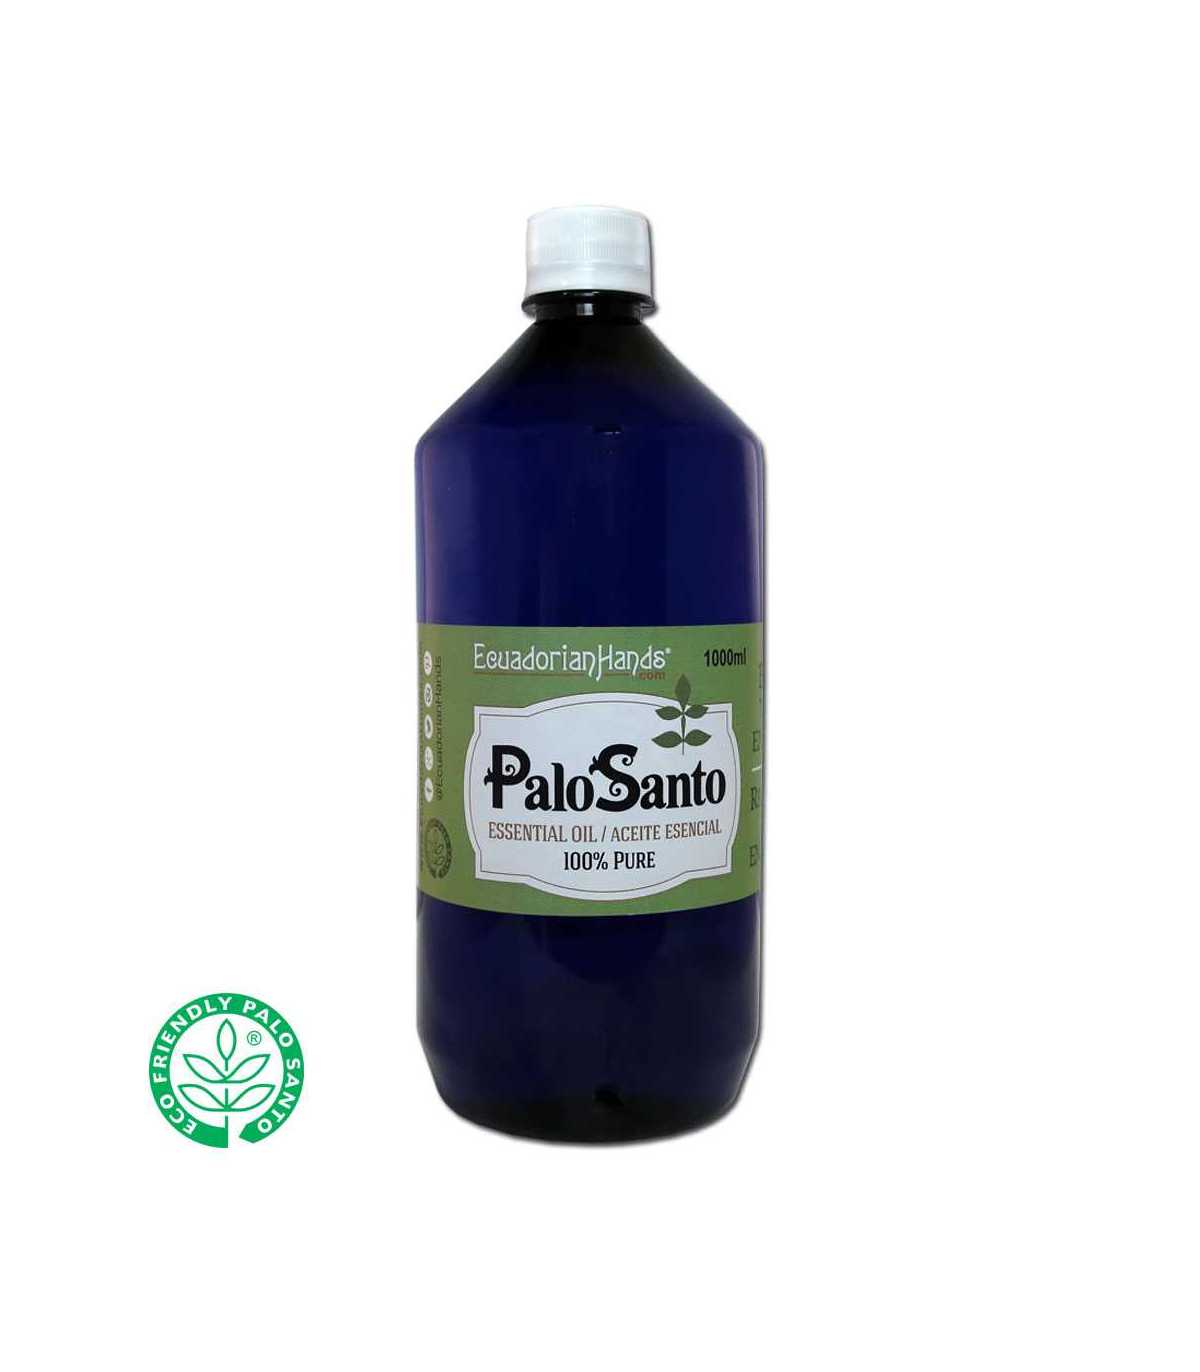 PALOSANTO - Palo Santo Essential Oil from Ecuador - Amarillo - Pure Organic  Essential Oils for Diffuser - Palo Santo Oil Ideal for Aromatherapy and